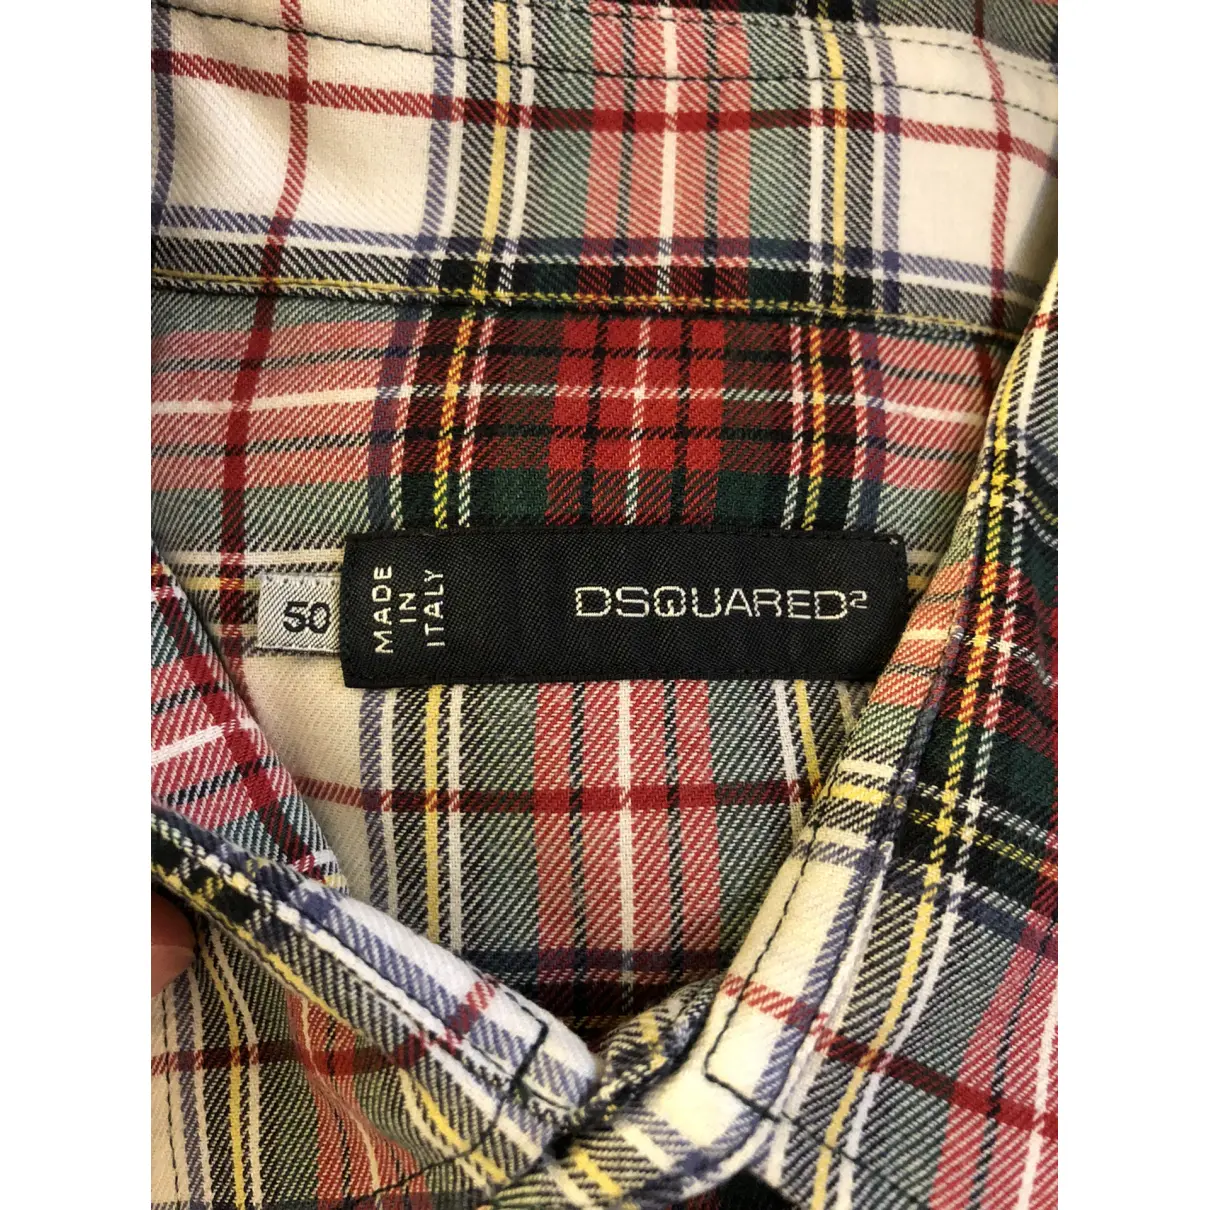 Buy Dsquared2 Shirt online